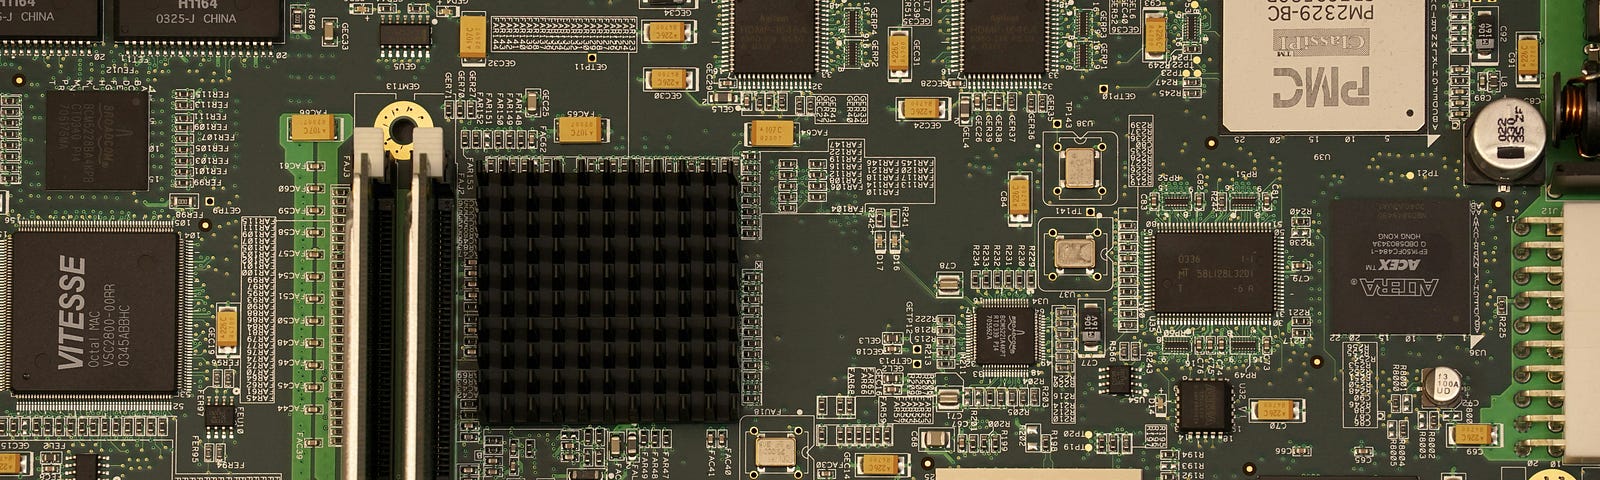 a modern circuit board